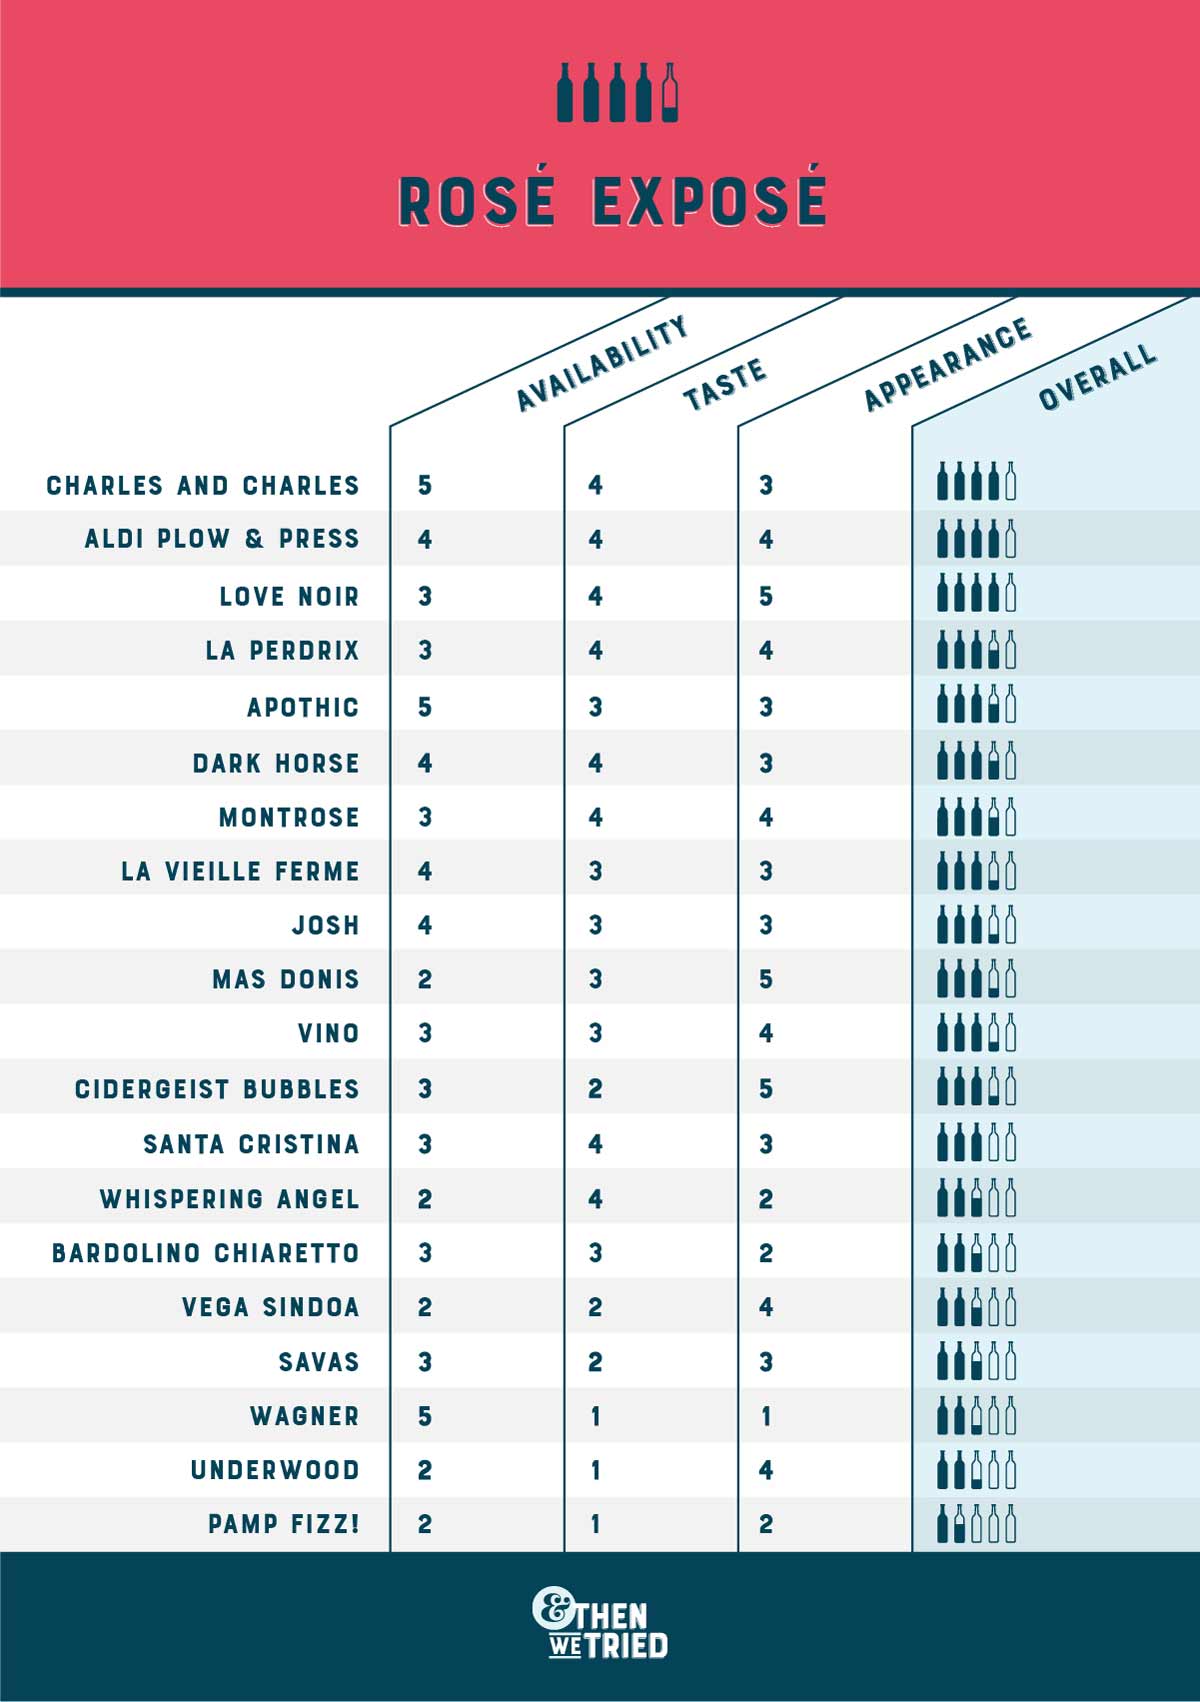 Rosé Exposé Official Ranking